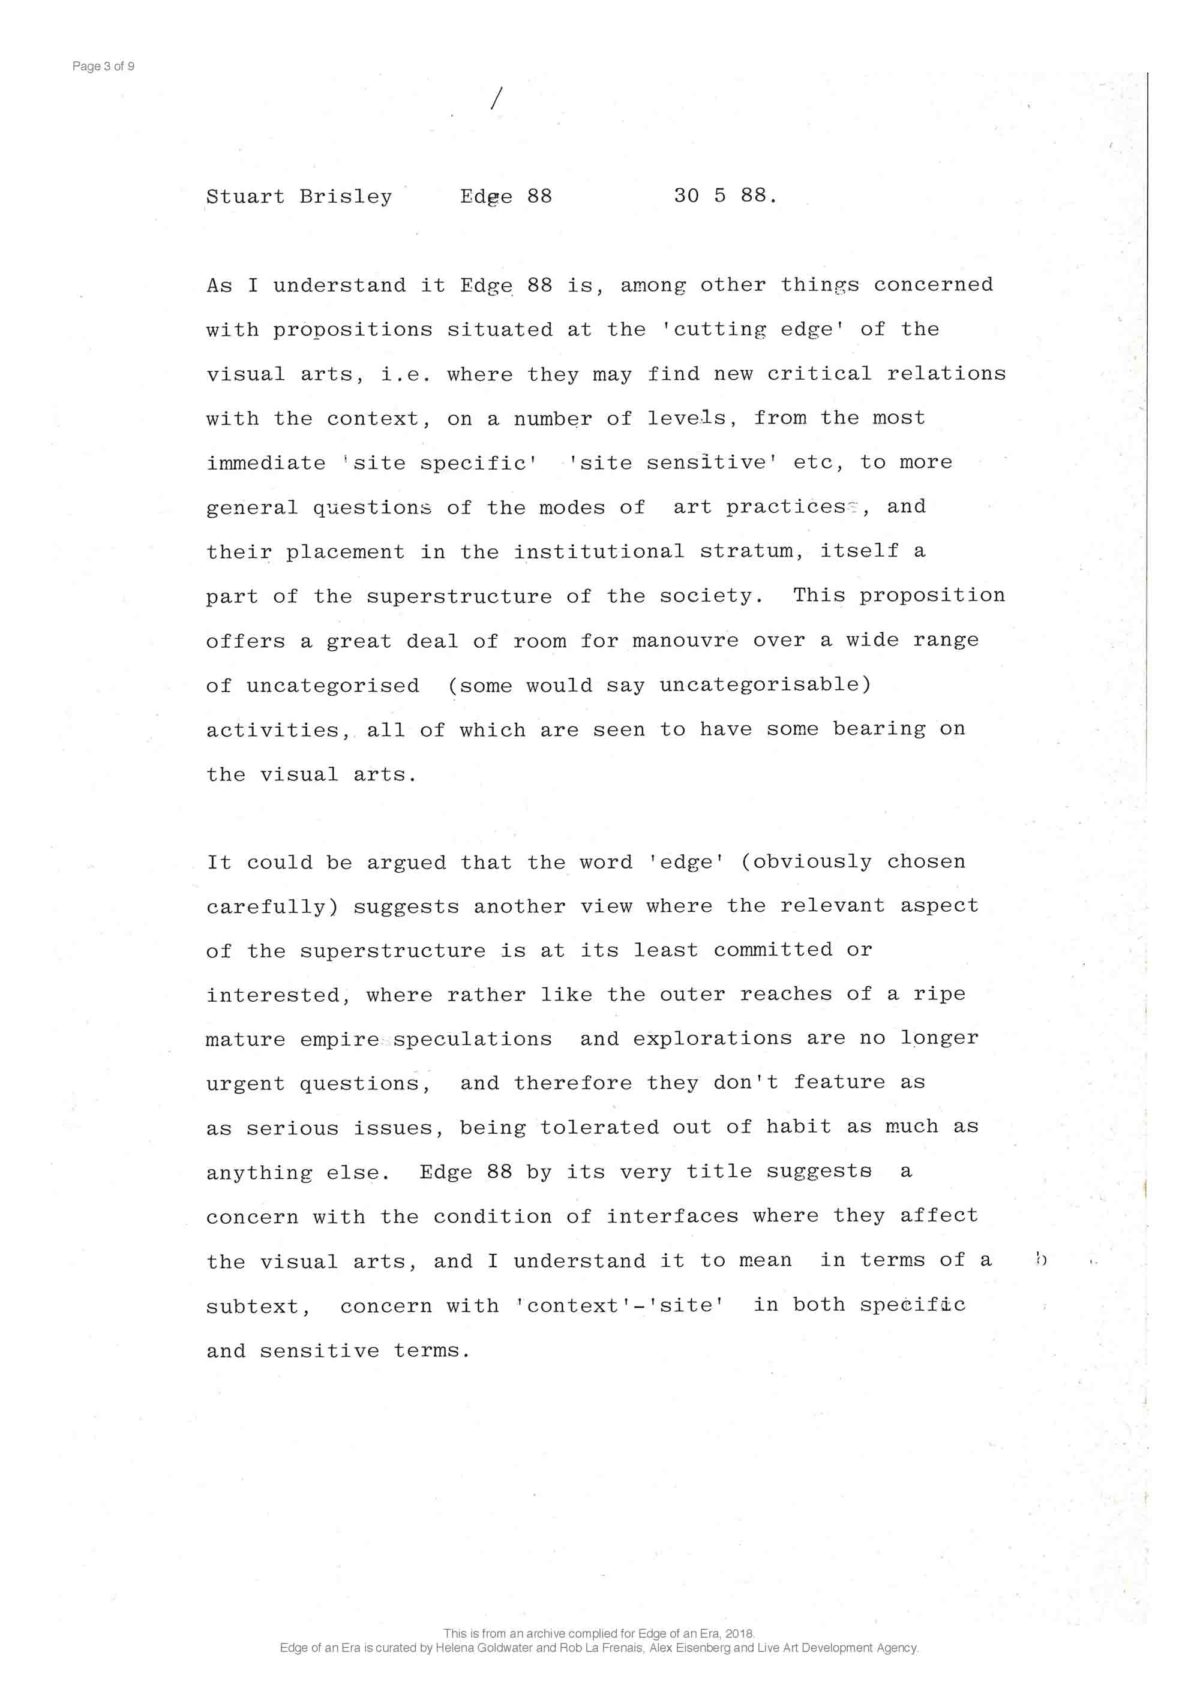 Stuart Brisley, Correspondence, 1988 (Page 3 of 9)